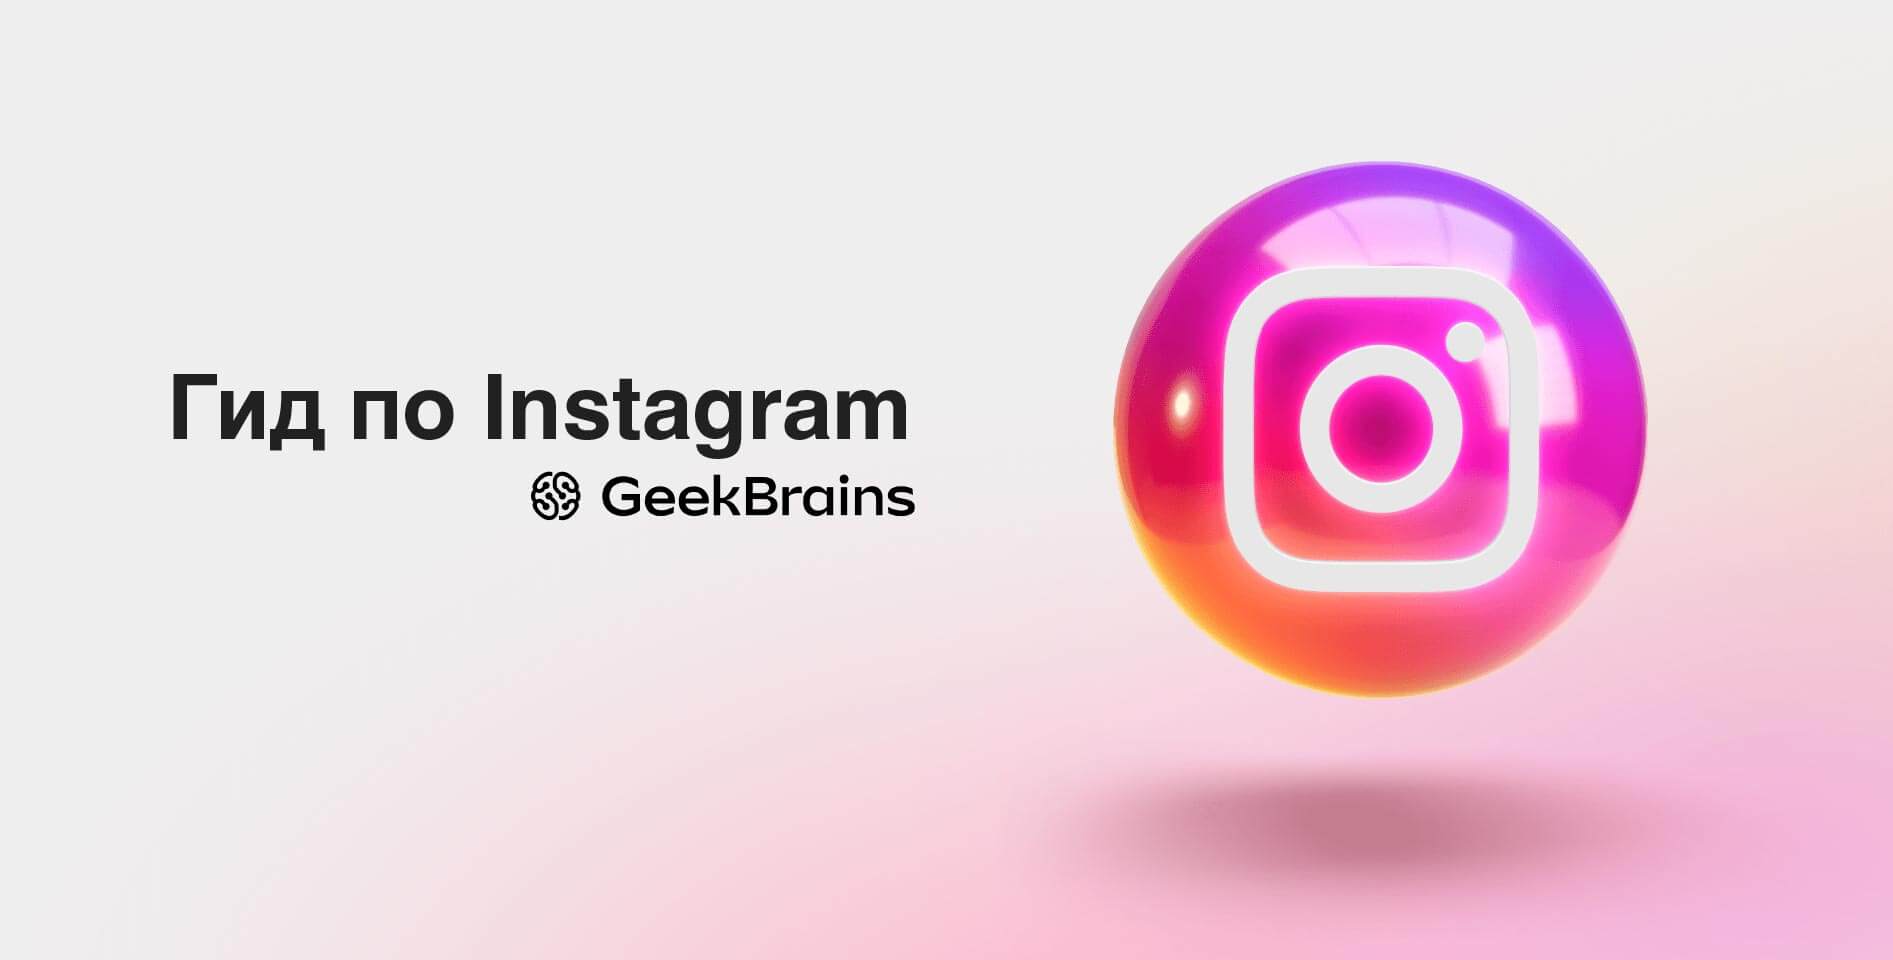  GeekBrains — «Гид по Instagram»